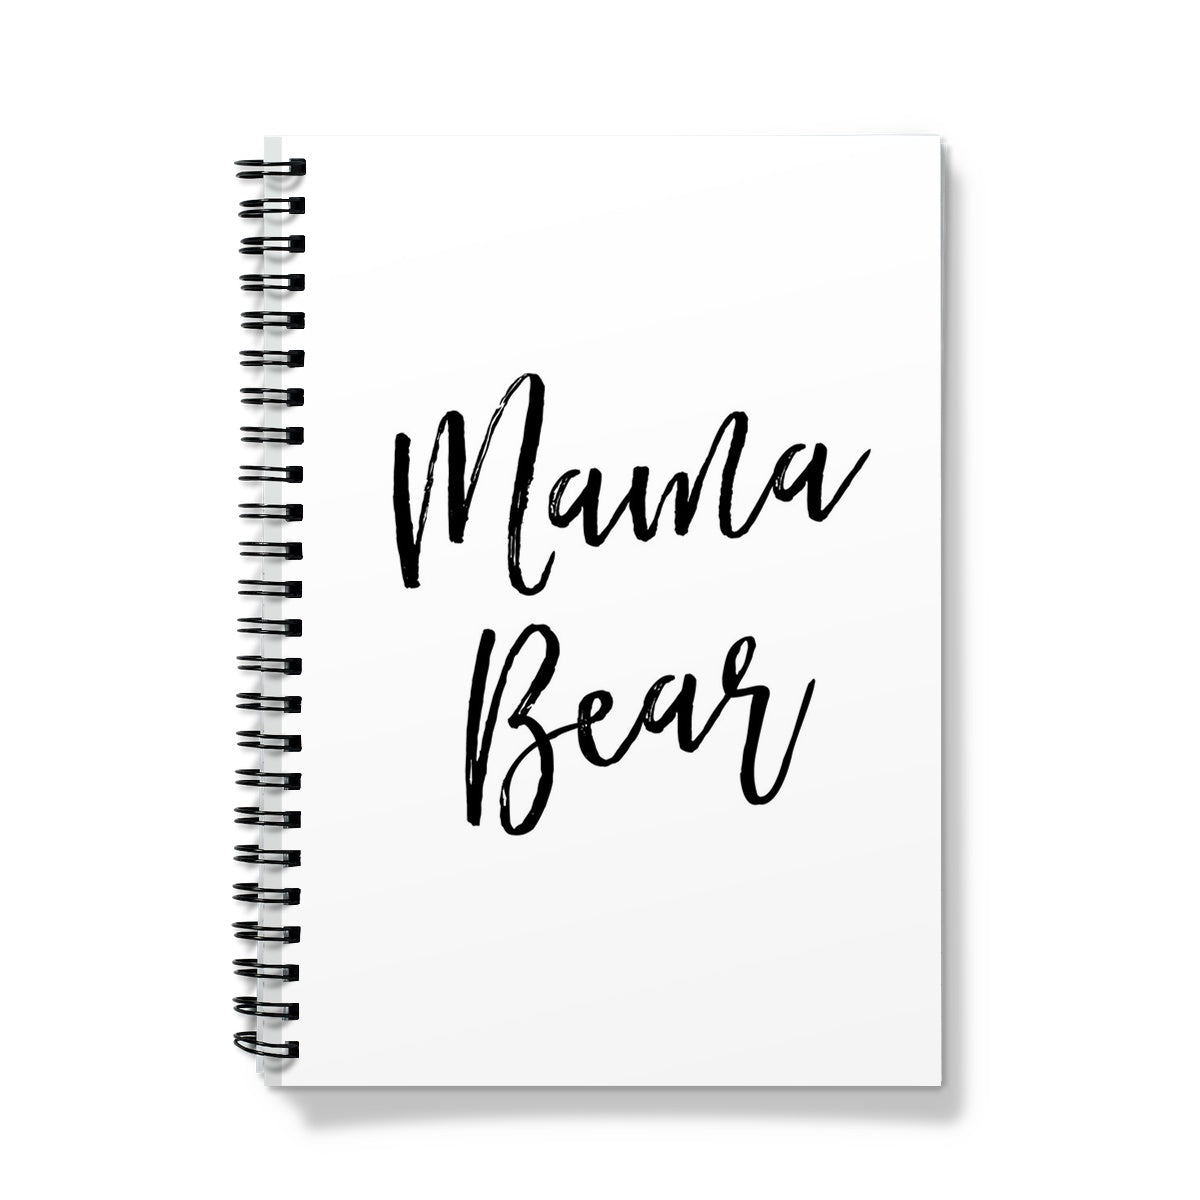 Mama Bear Notebook